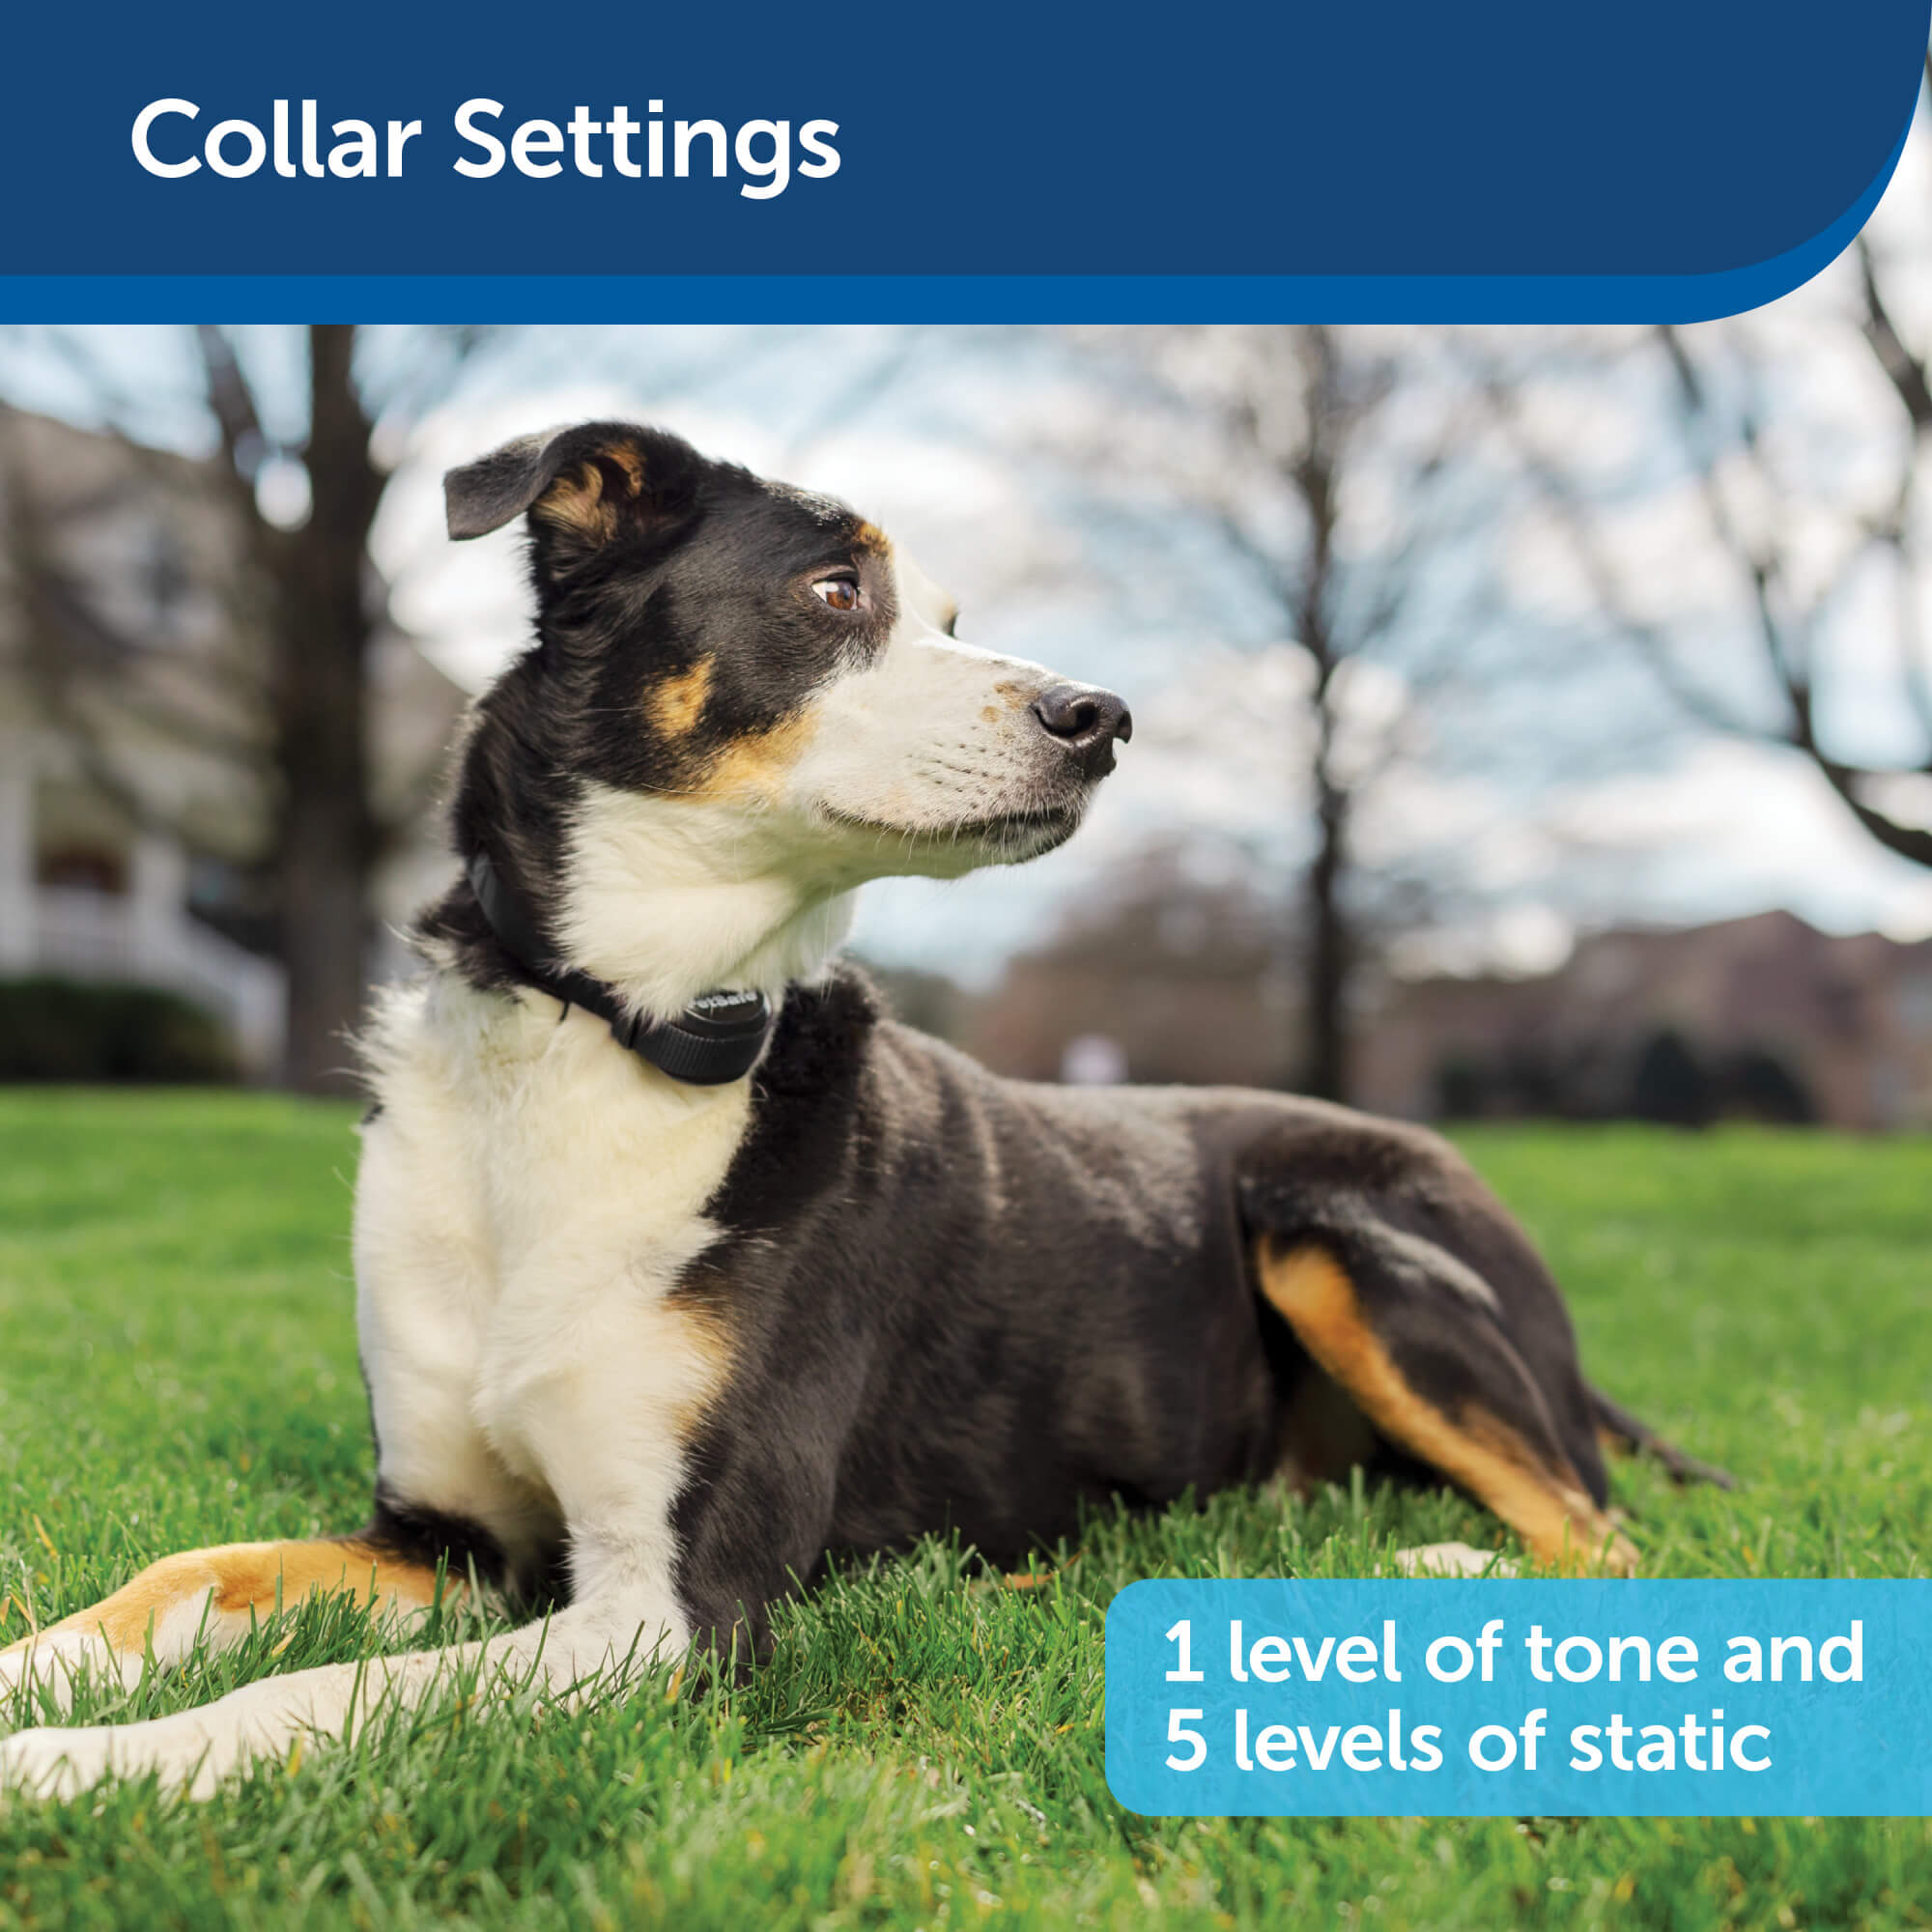 Dog wearing collar with collar settings